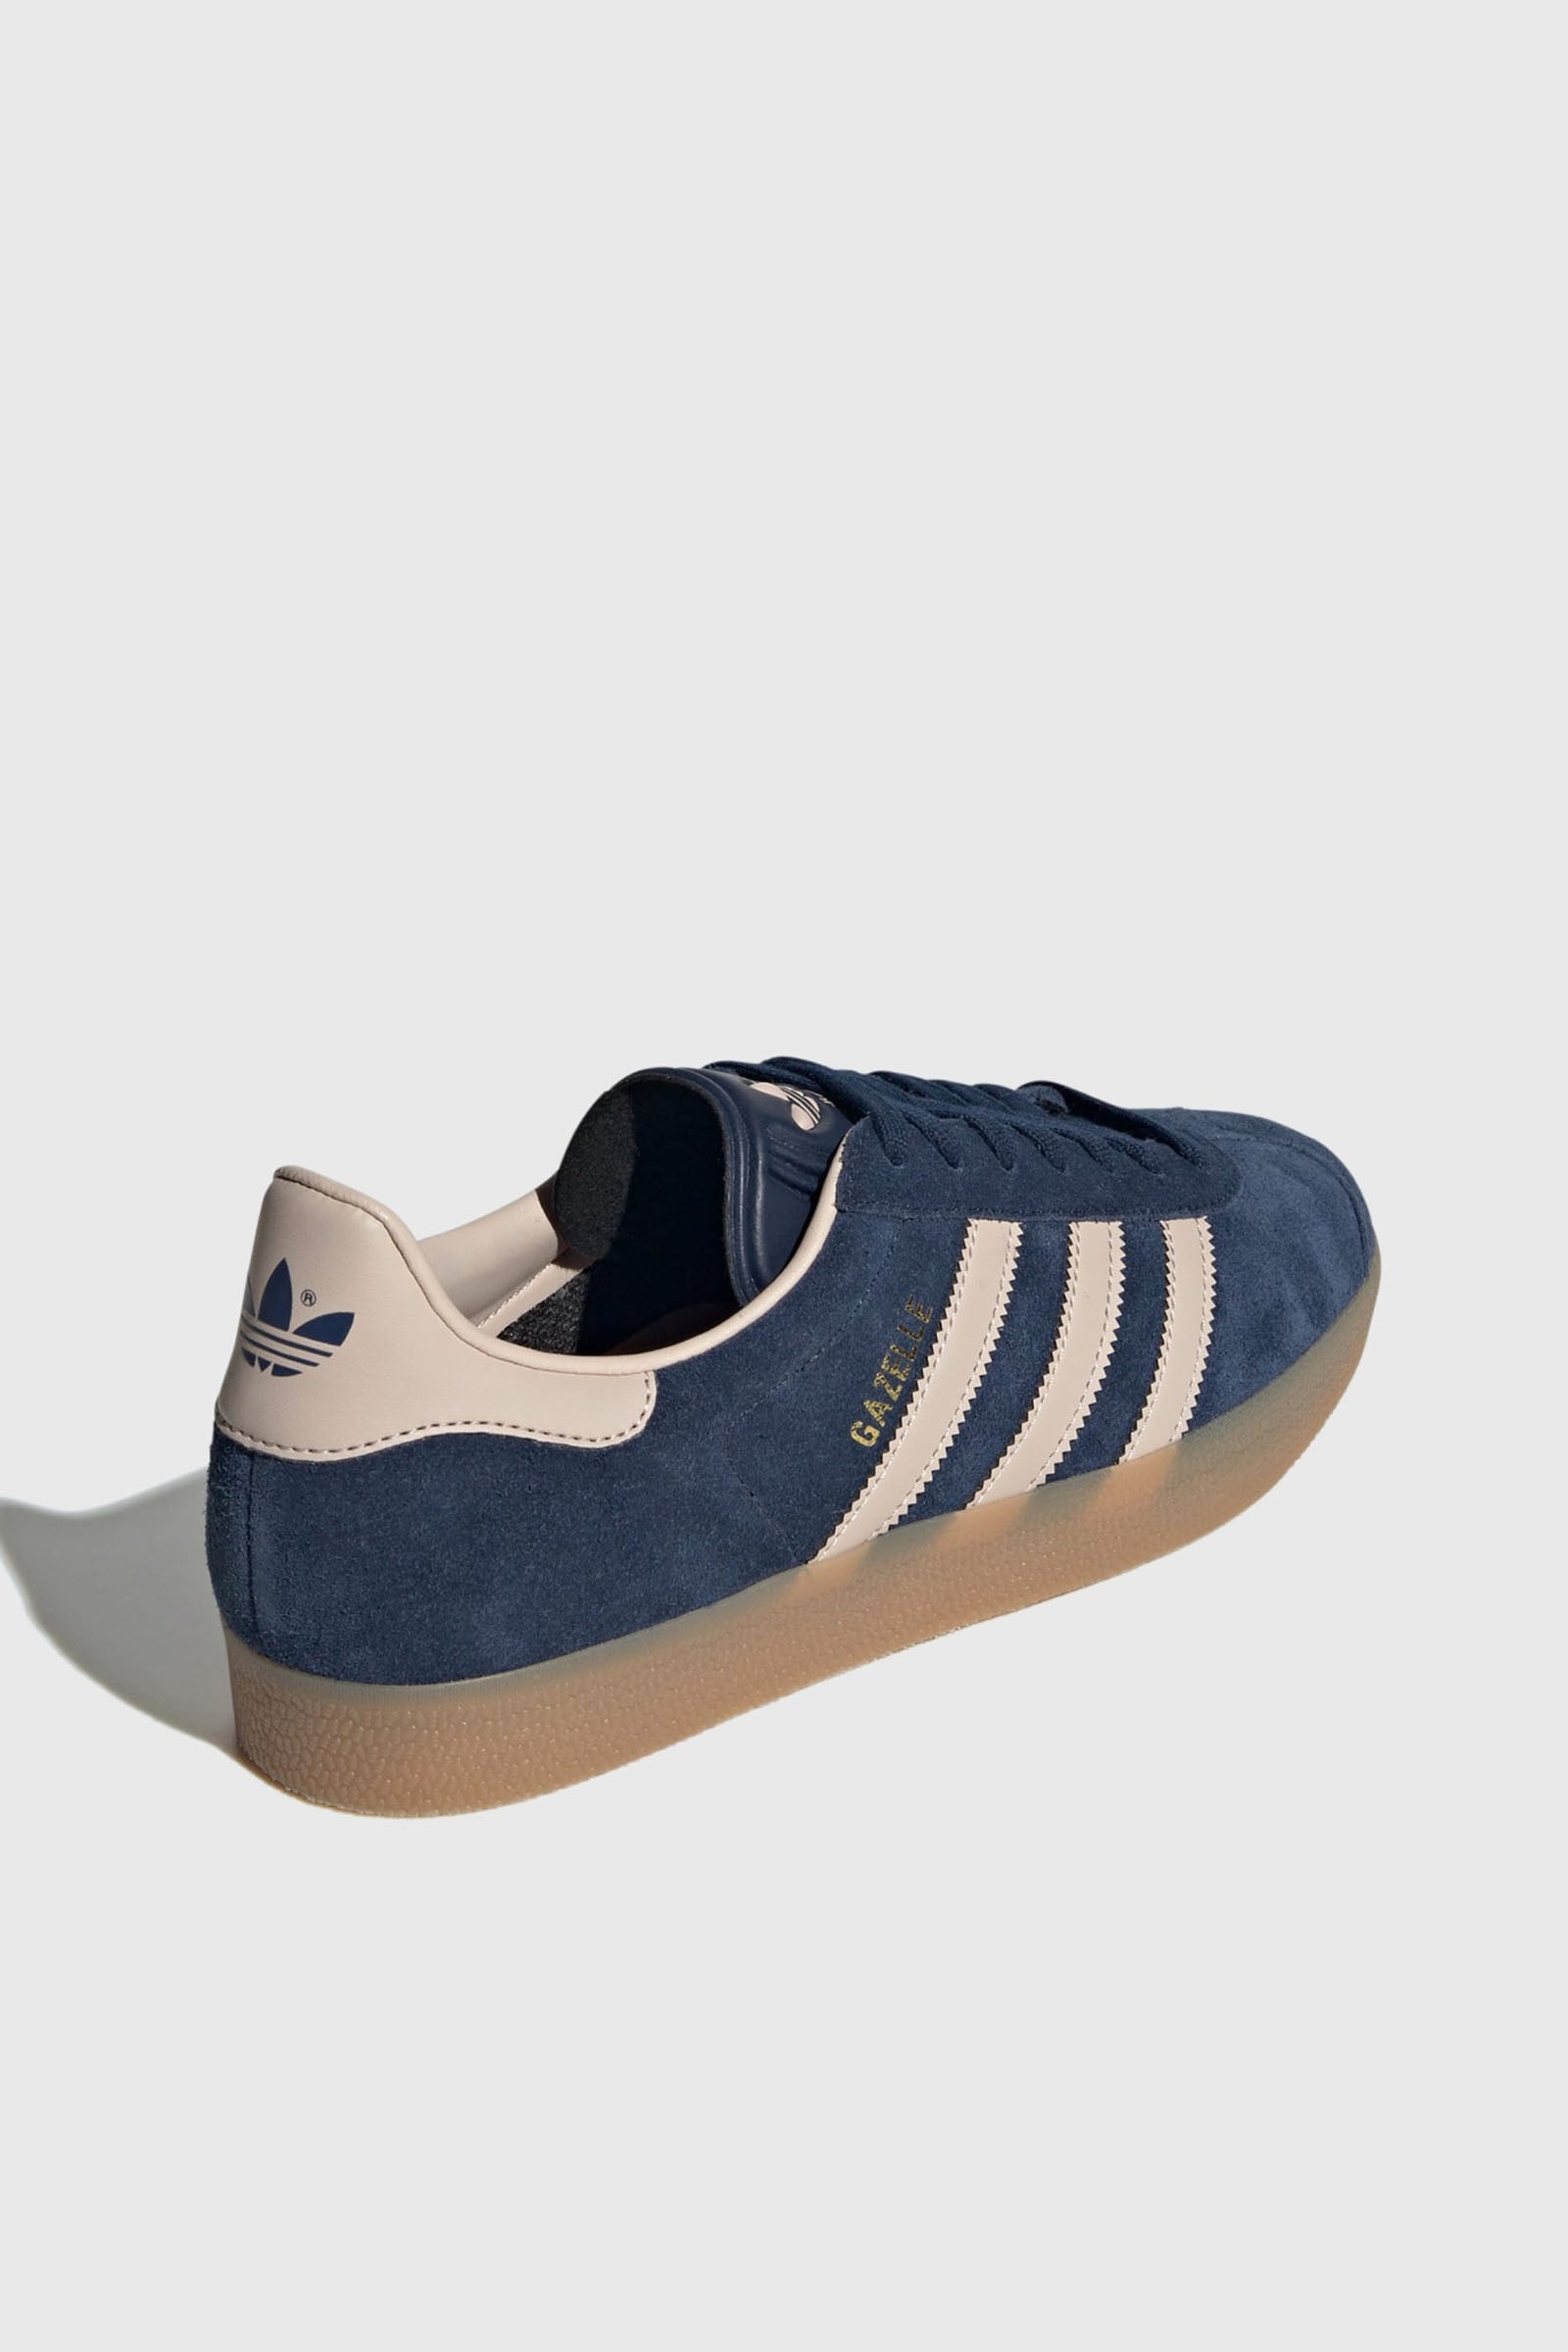 Adidas Originals Synthetic Blue Gazelle Sneaker - 3